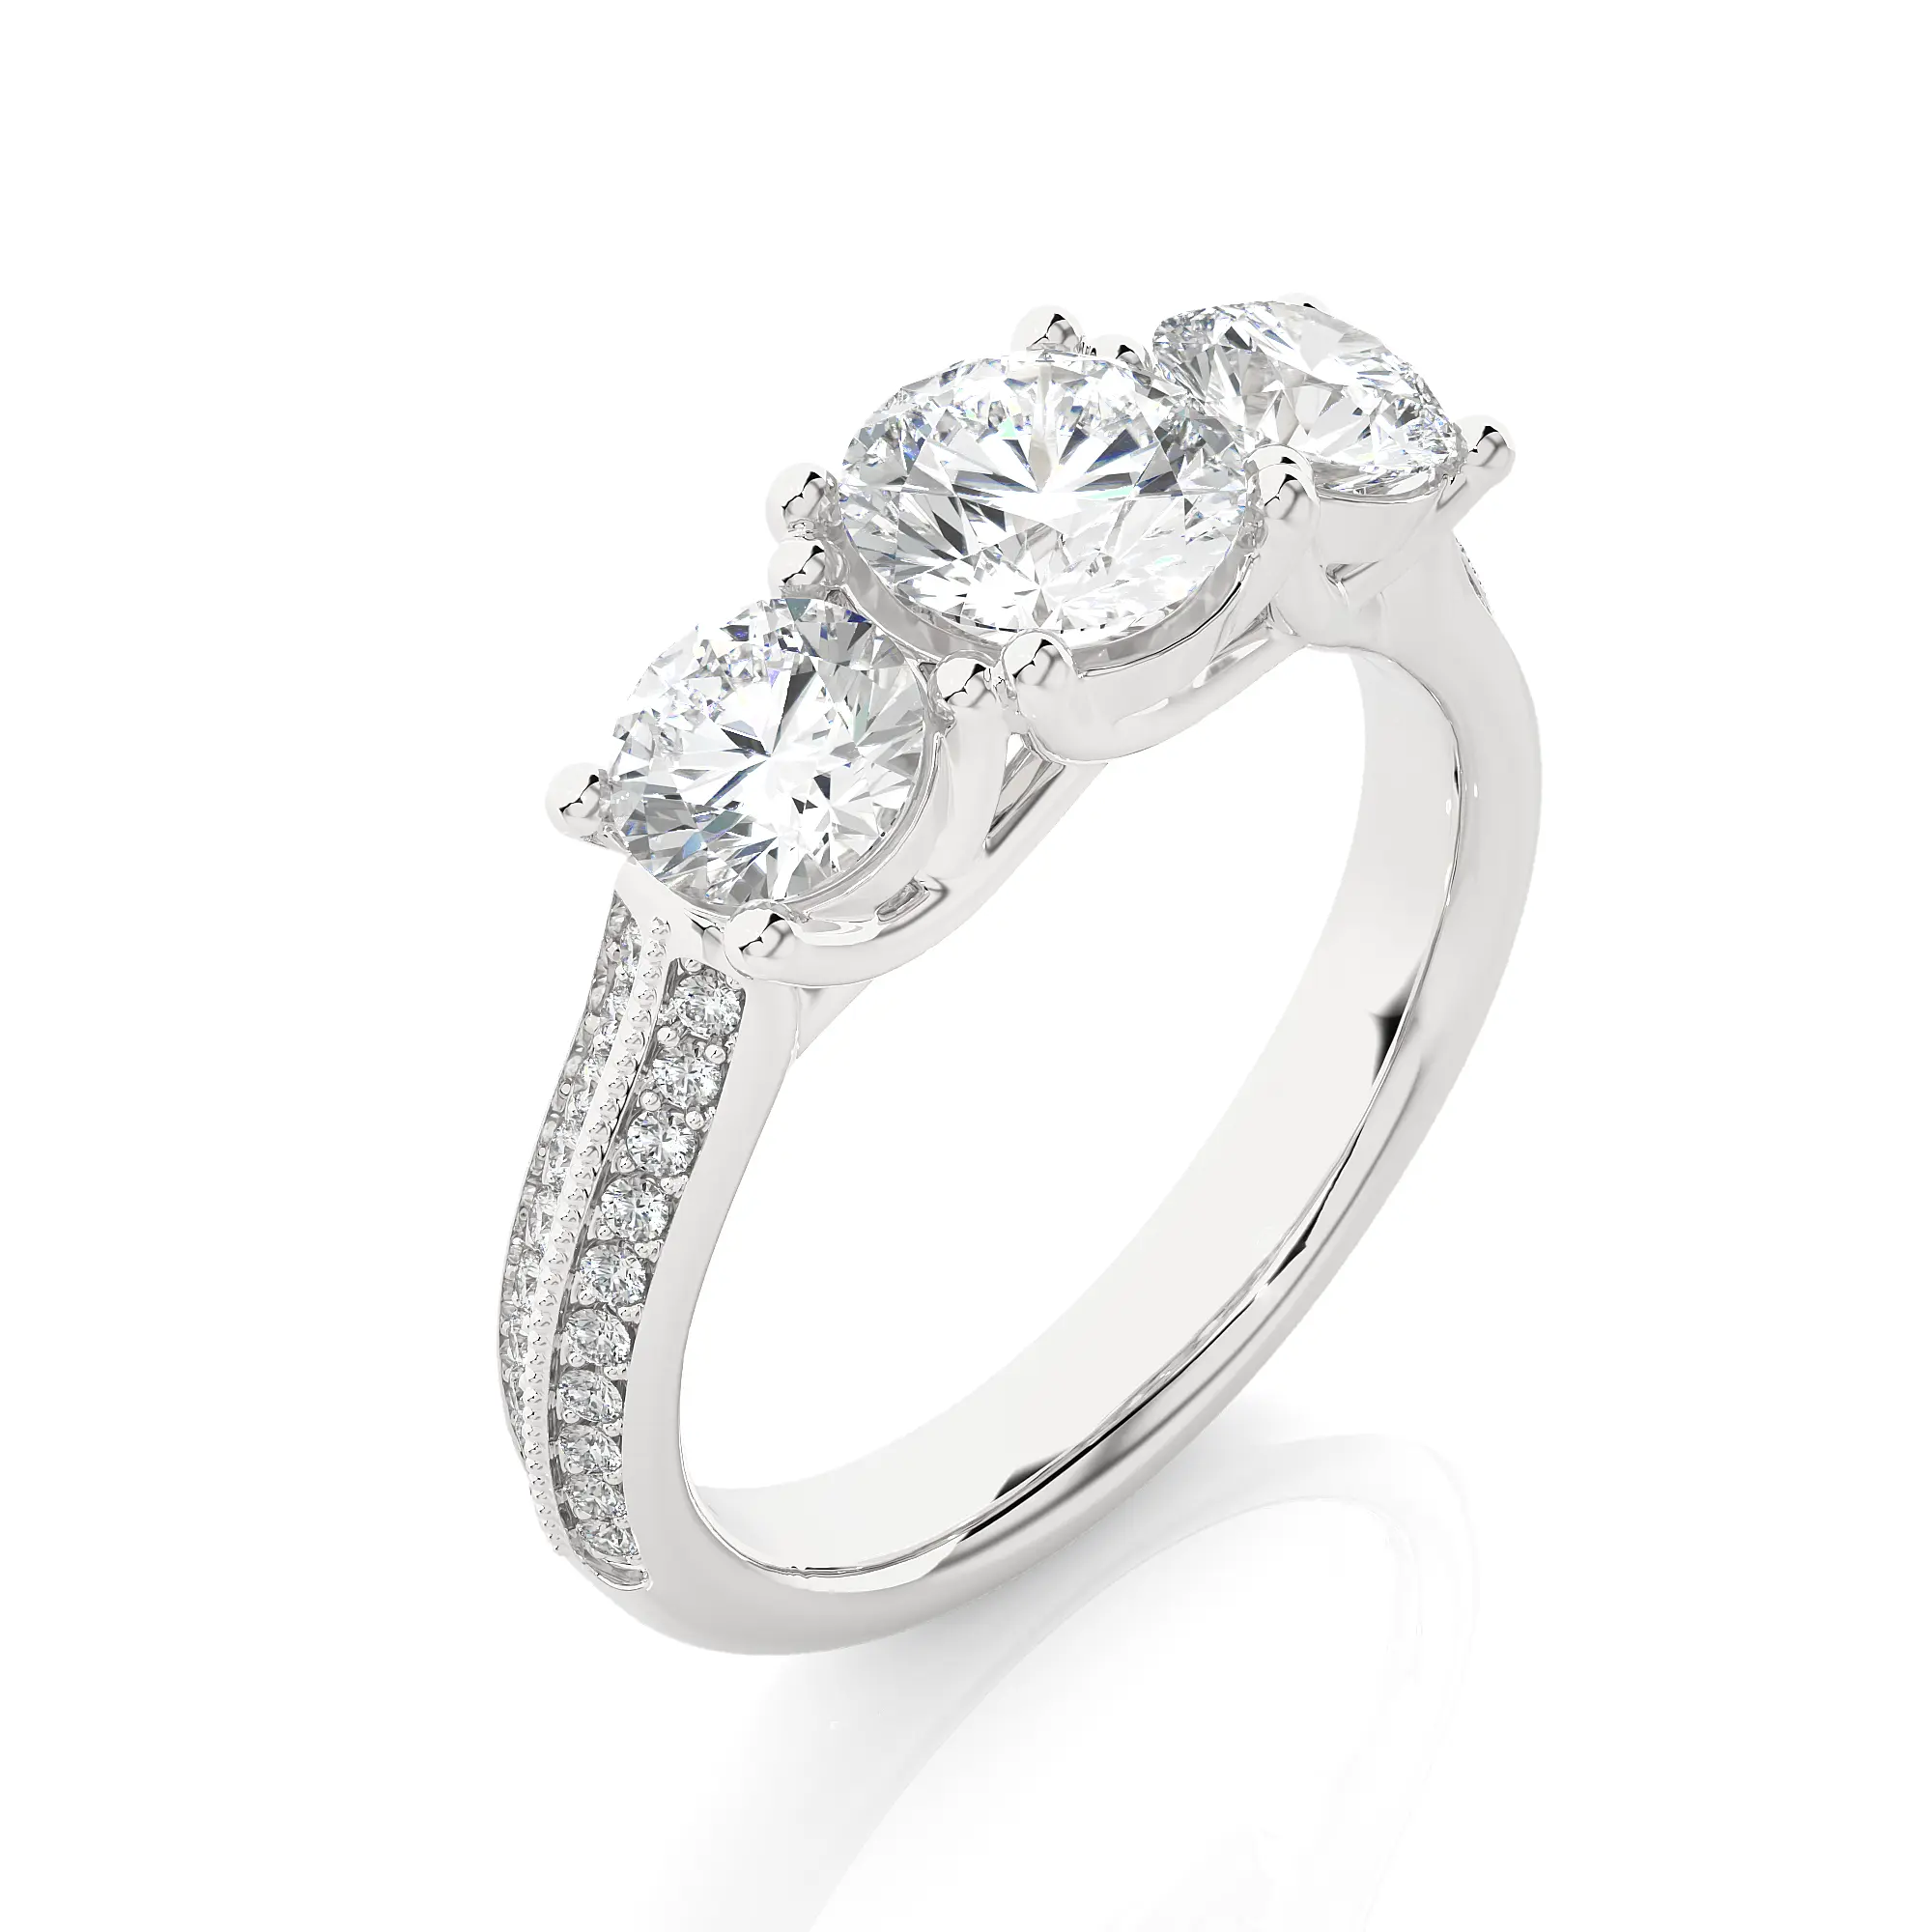 Real diamond ring | Real diamond rings, Diamond ring, Real diamonds-totobed.com.vn